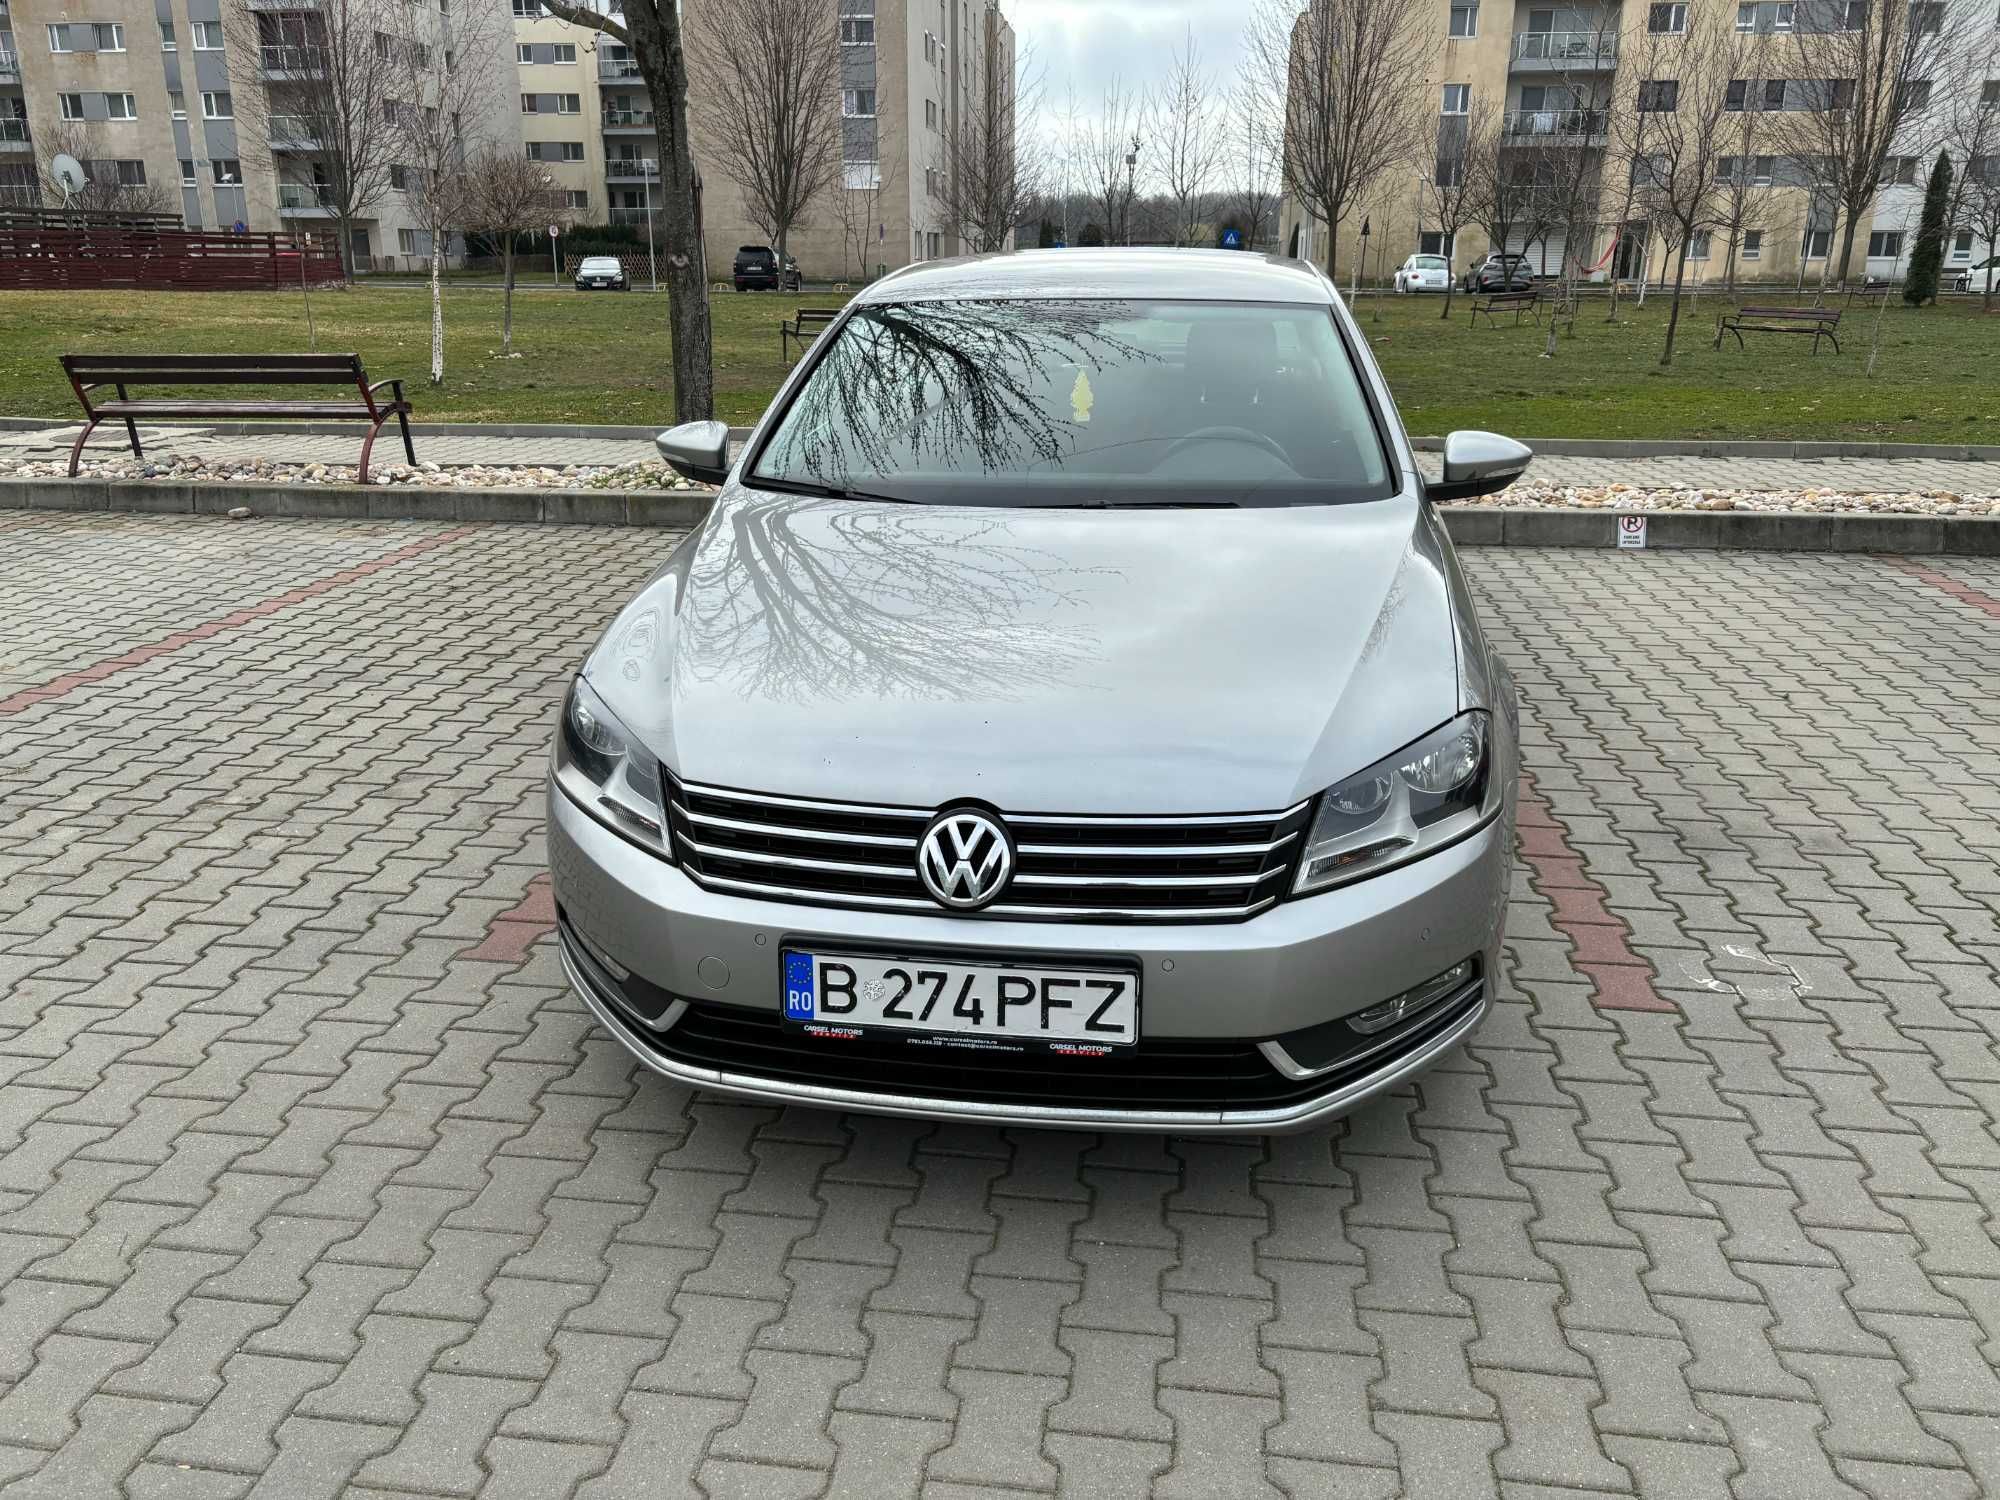 VW Passat 2014 /144.000 km